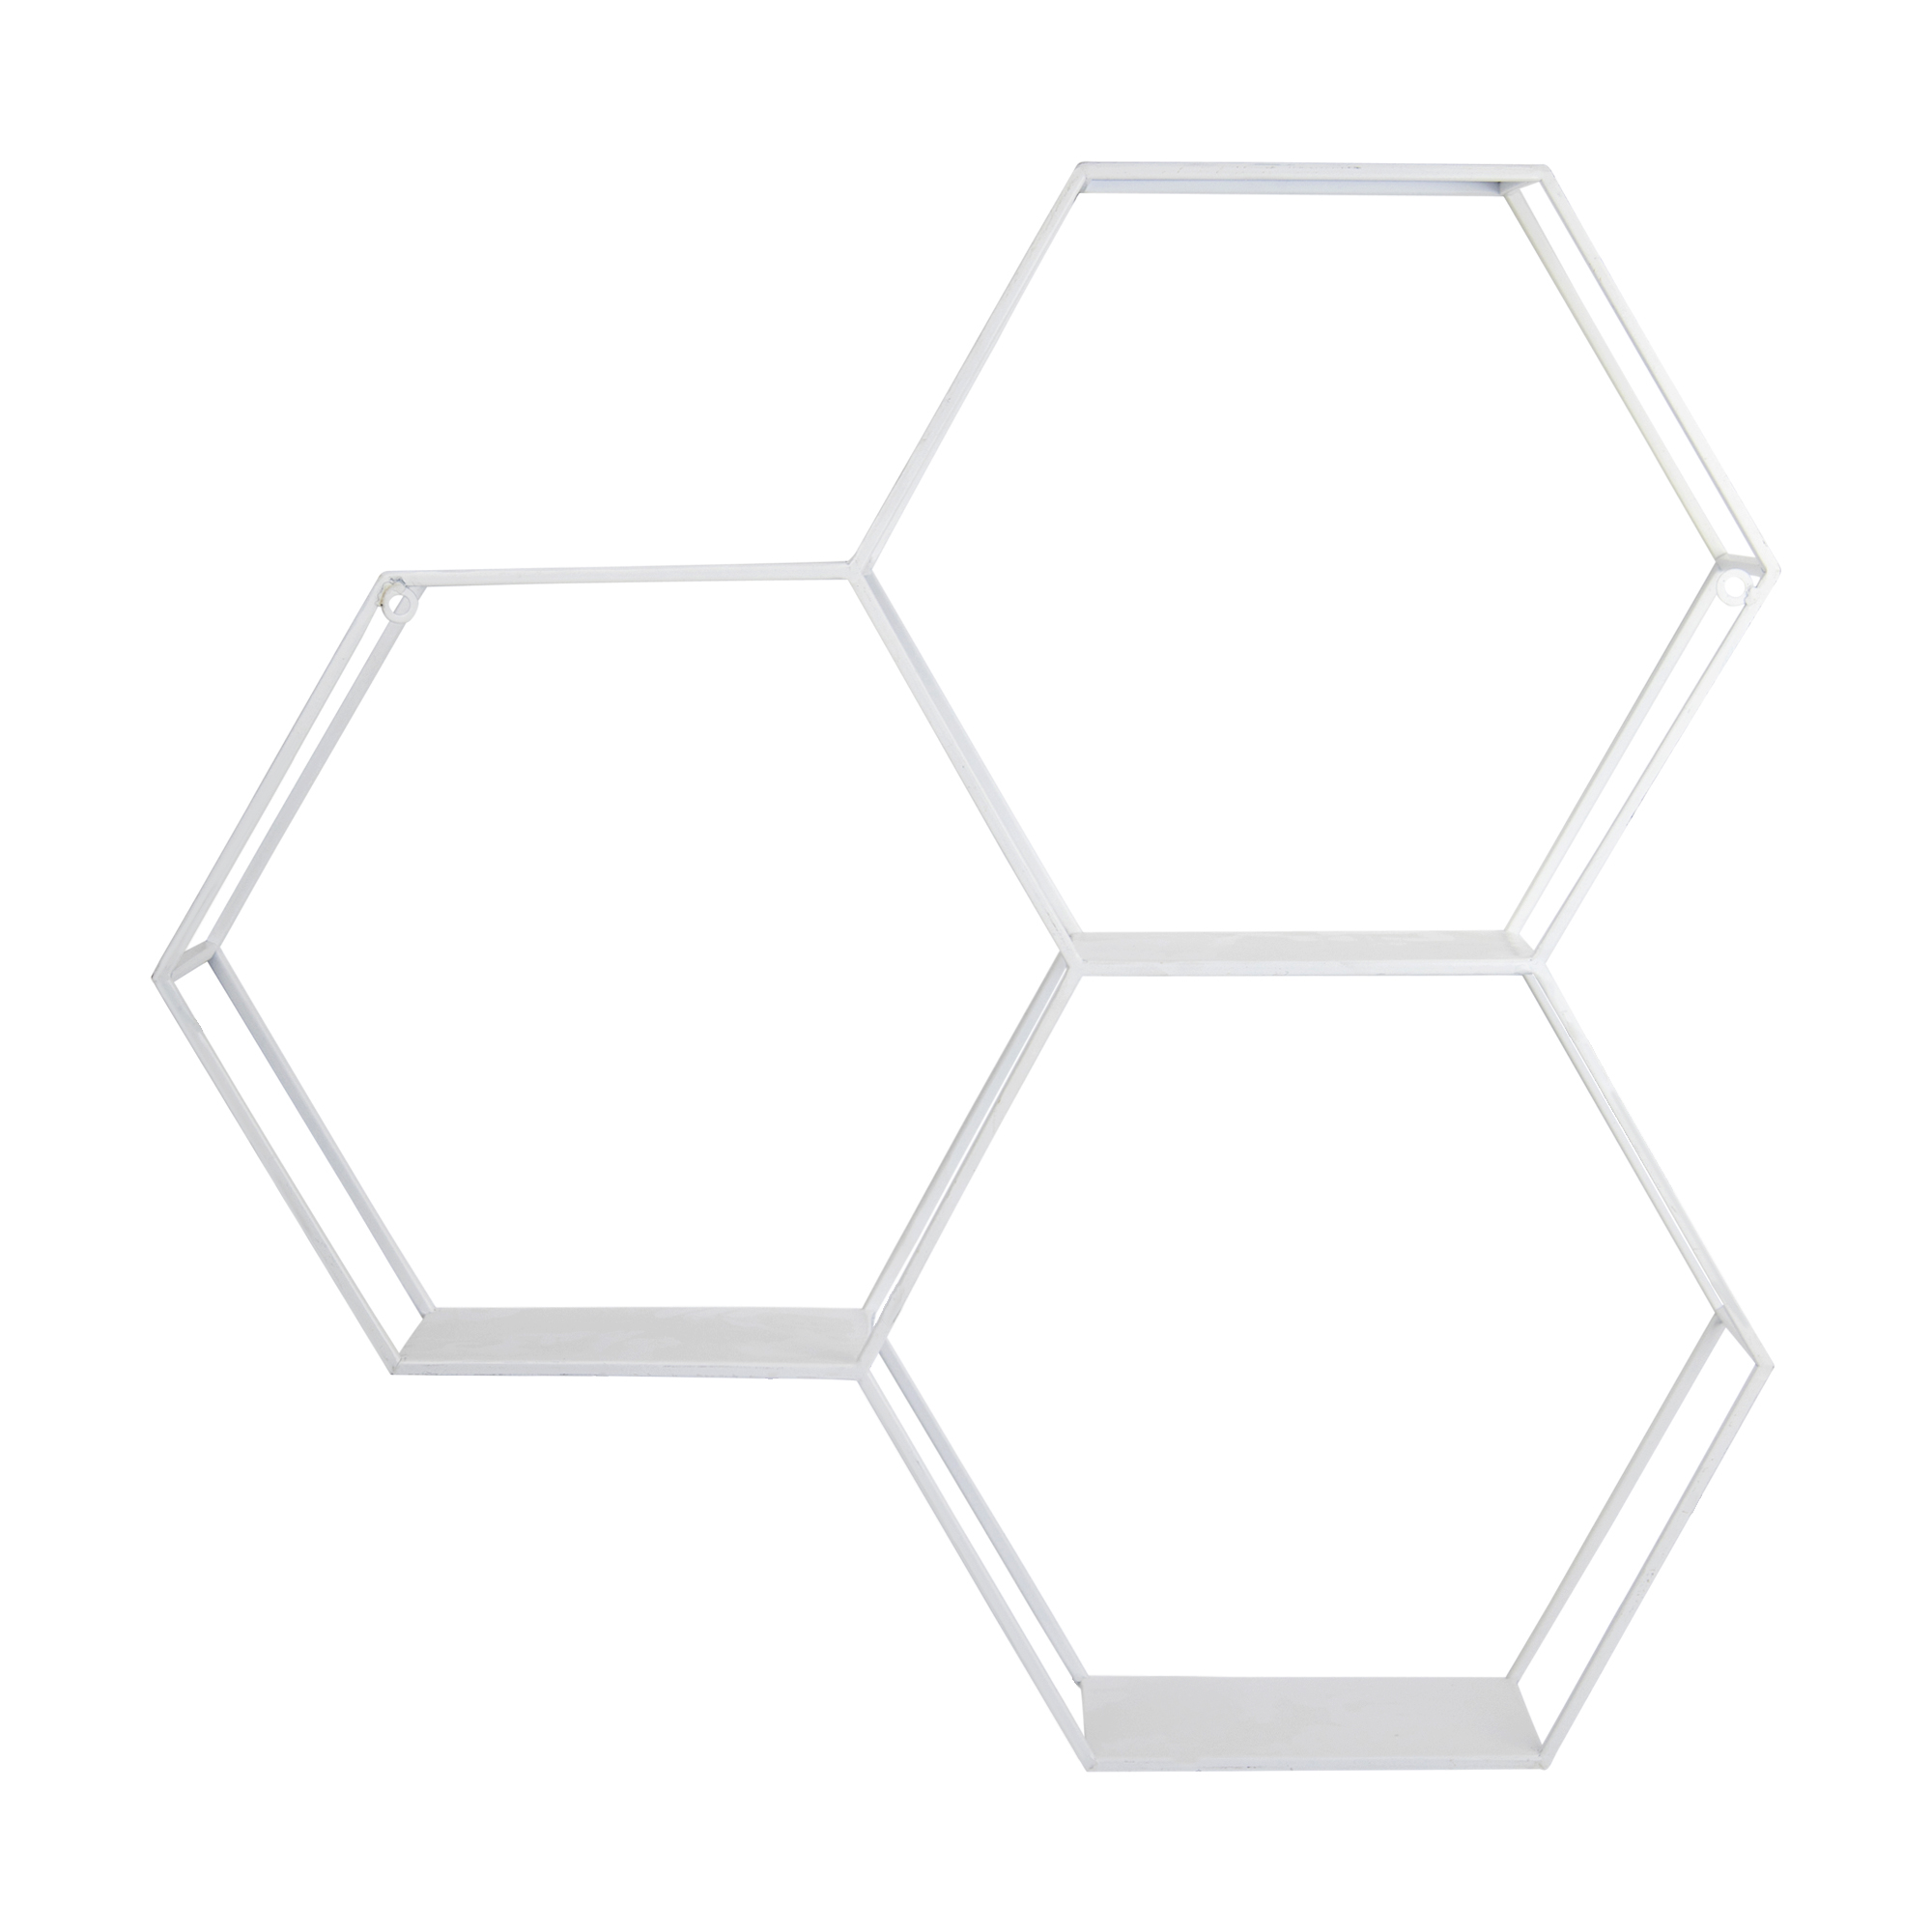 Hexagonal Metal Shelf with D-Ring